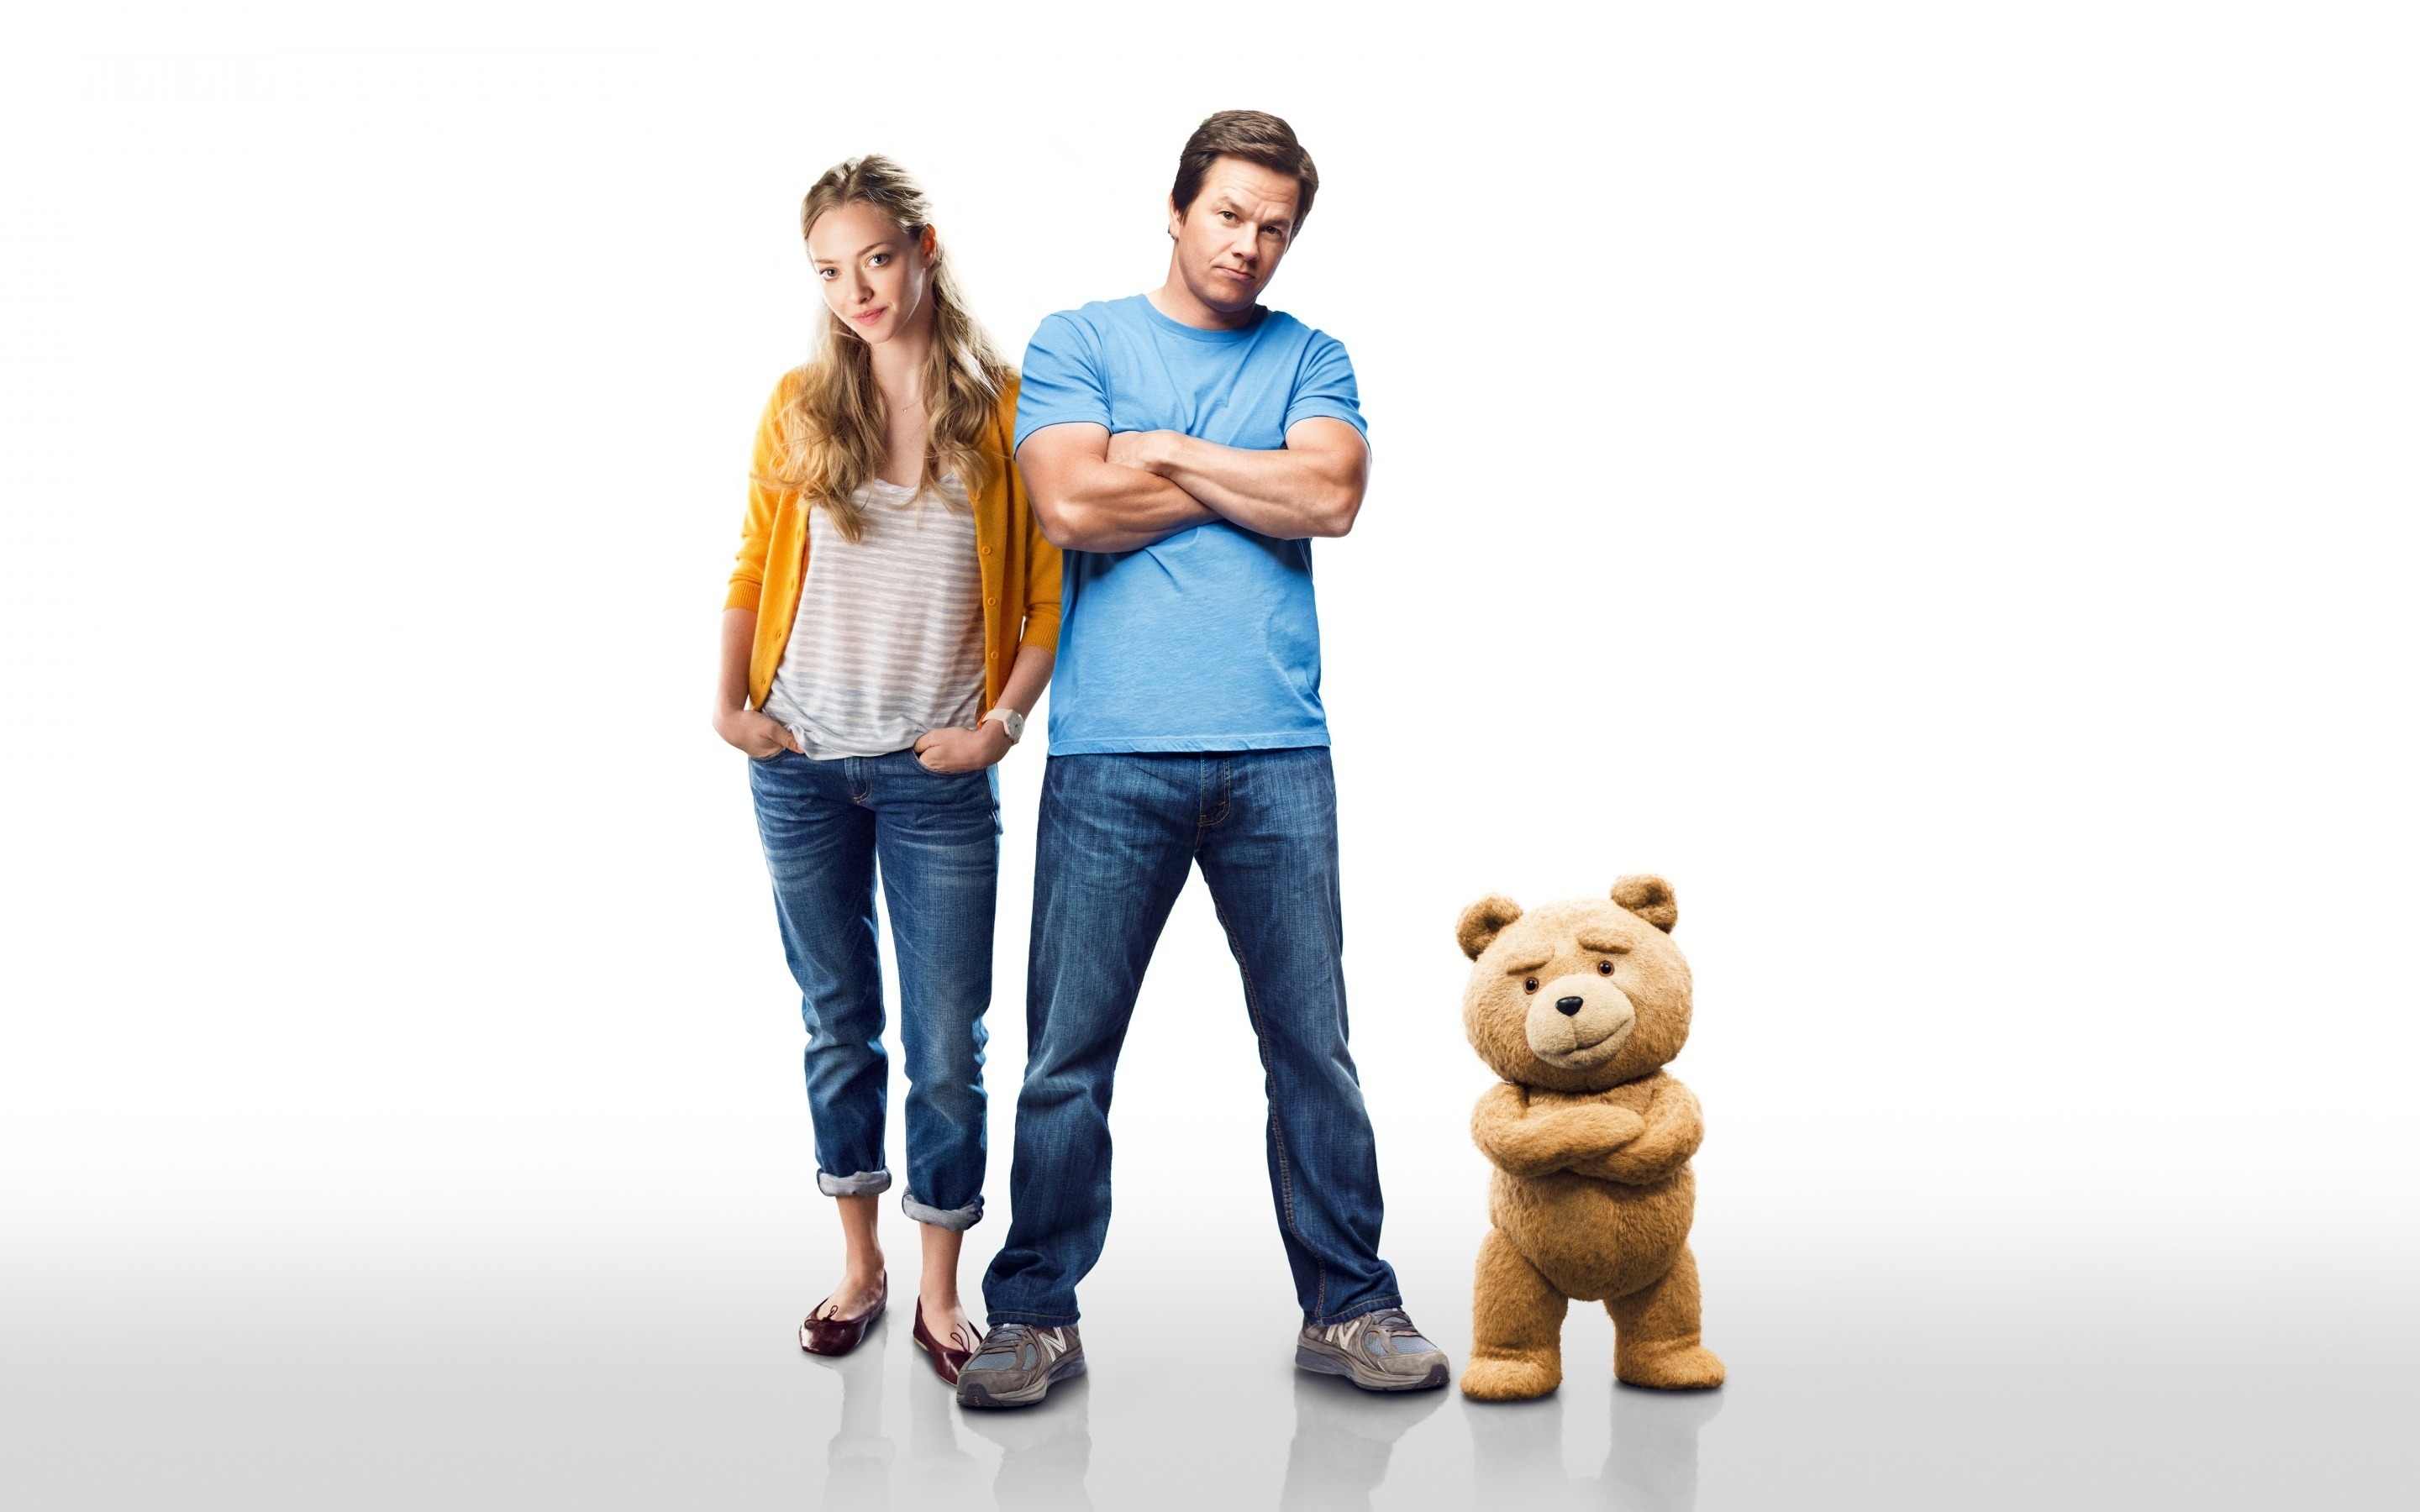 movie, ted 2, amanda seyfried, mark wahlberg, ted (movie character), teddy bear